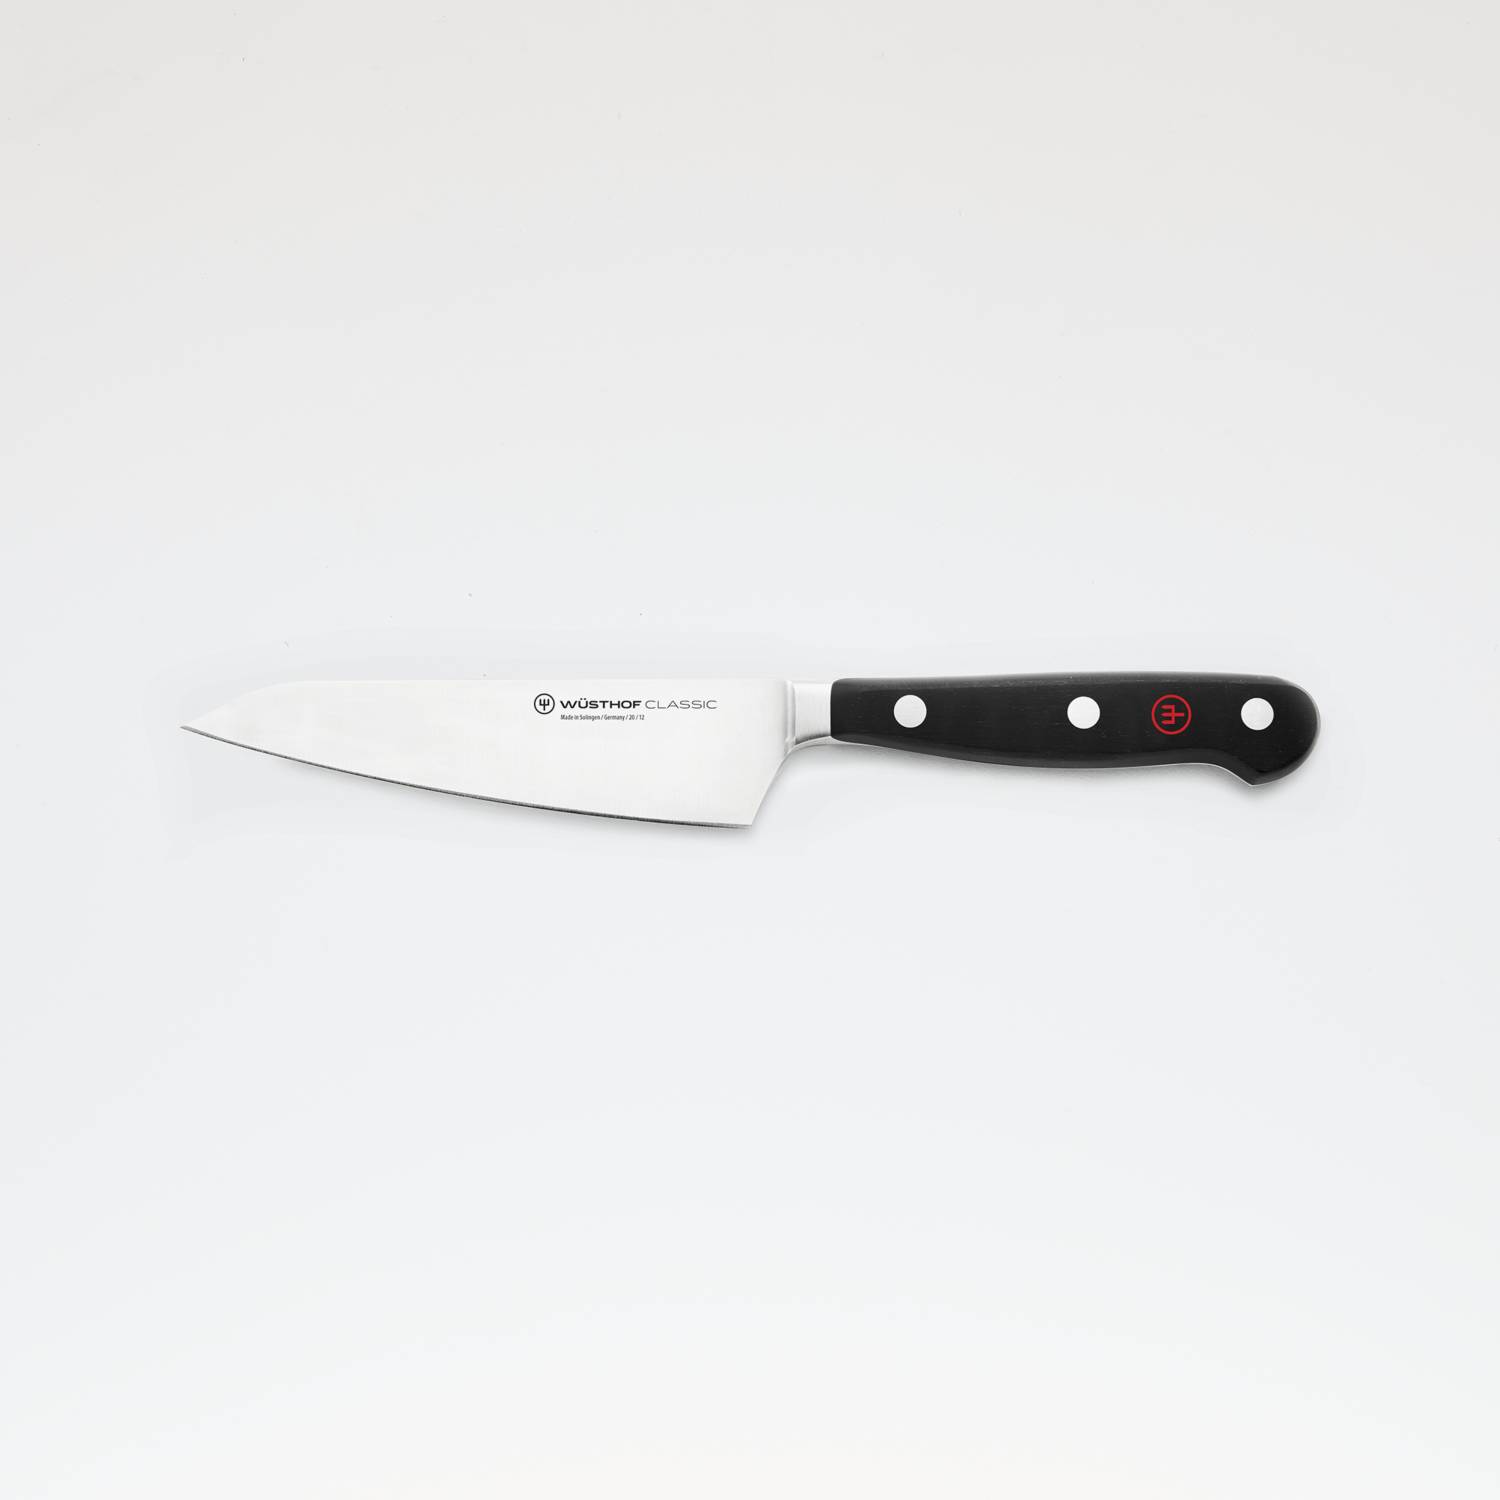 26% off Wusthoff Classic 4.5” Asian Utility Knife $63.96